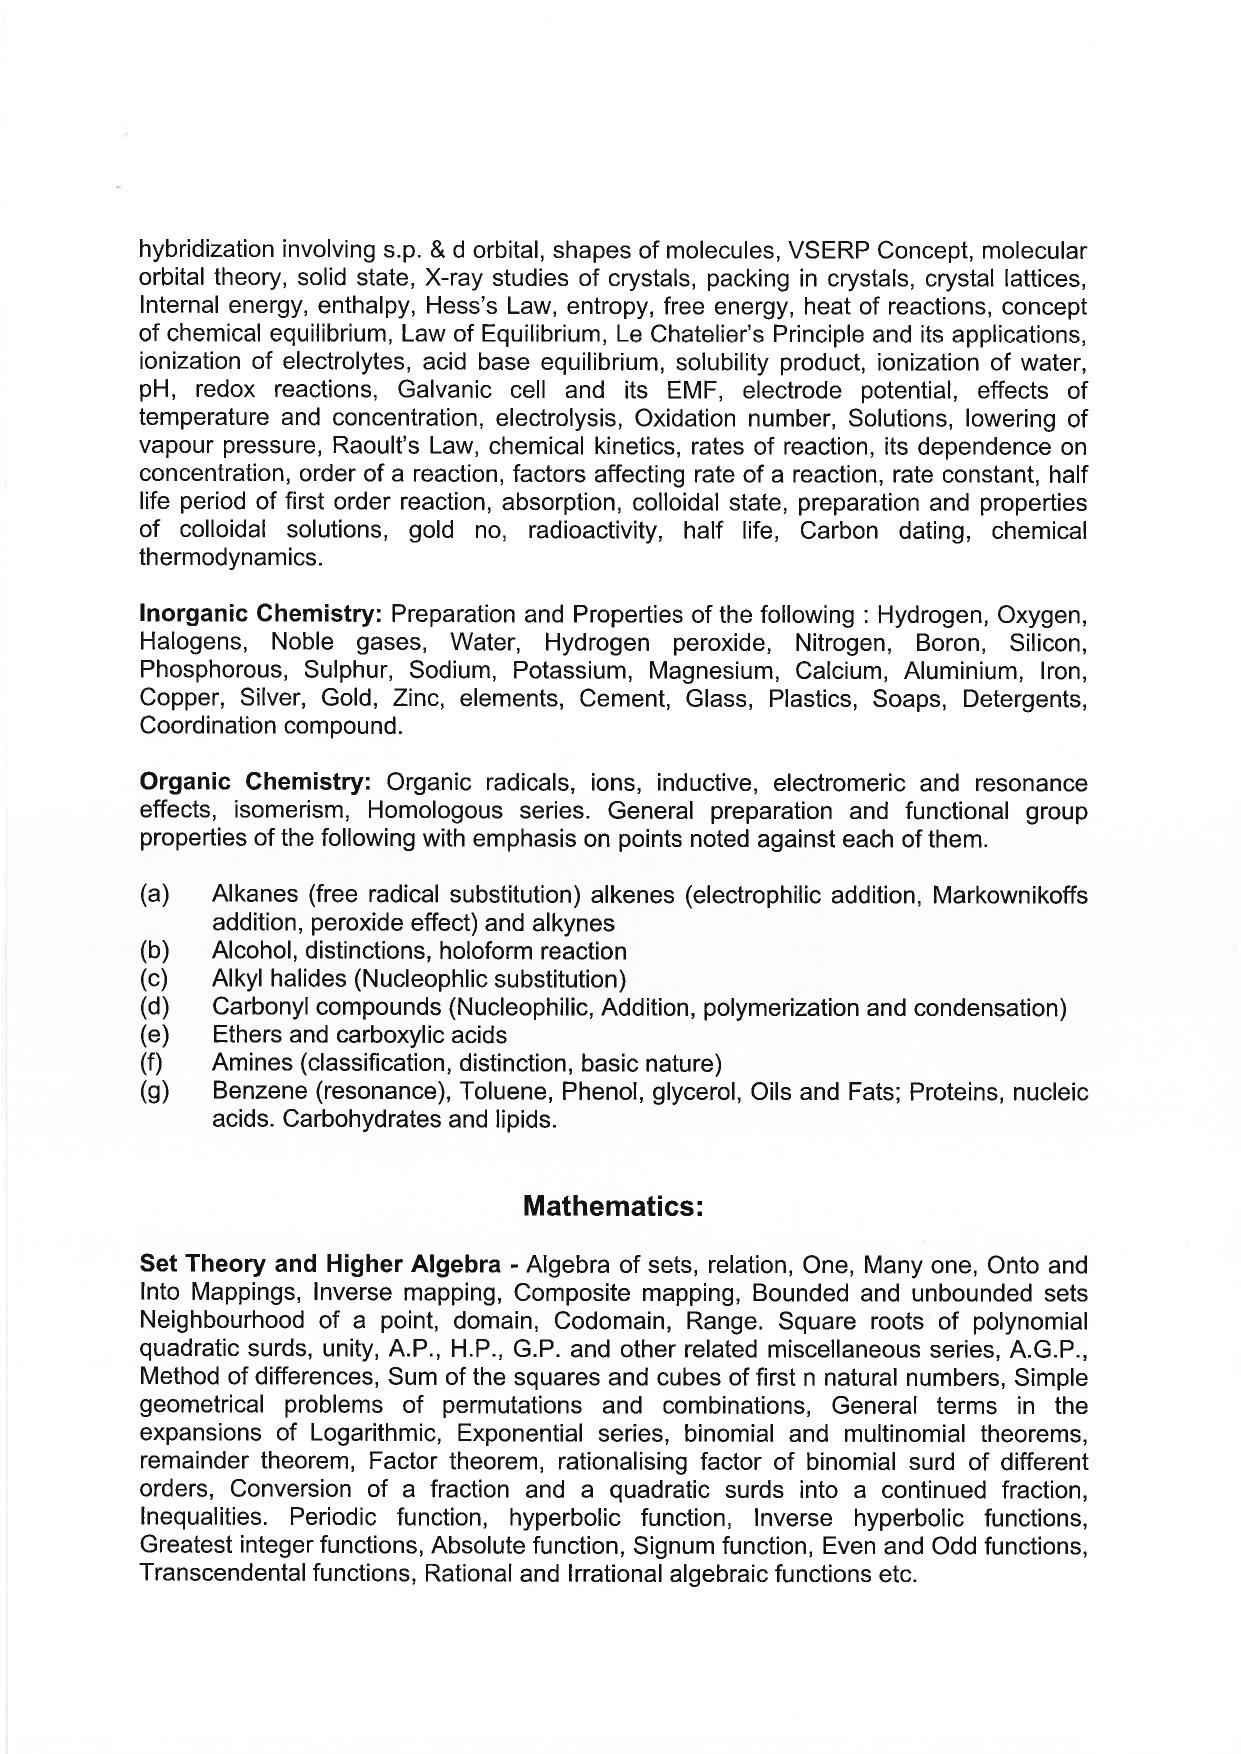 JMI Entrance Exam B39-B.Sc.-Aeronautics (Mechanical/Avionics) (self-financed) Syllabus - Page 2